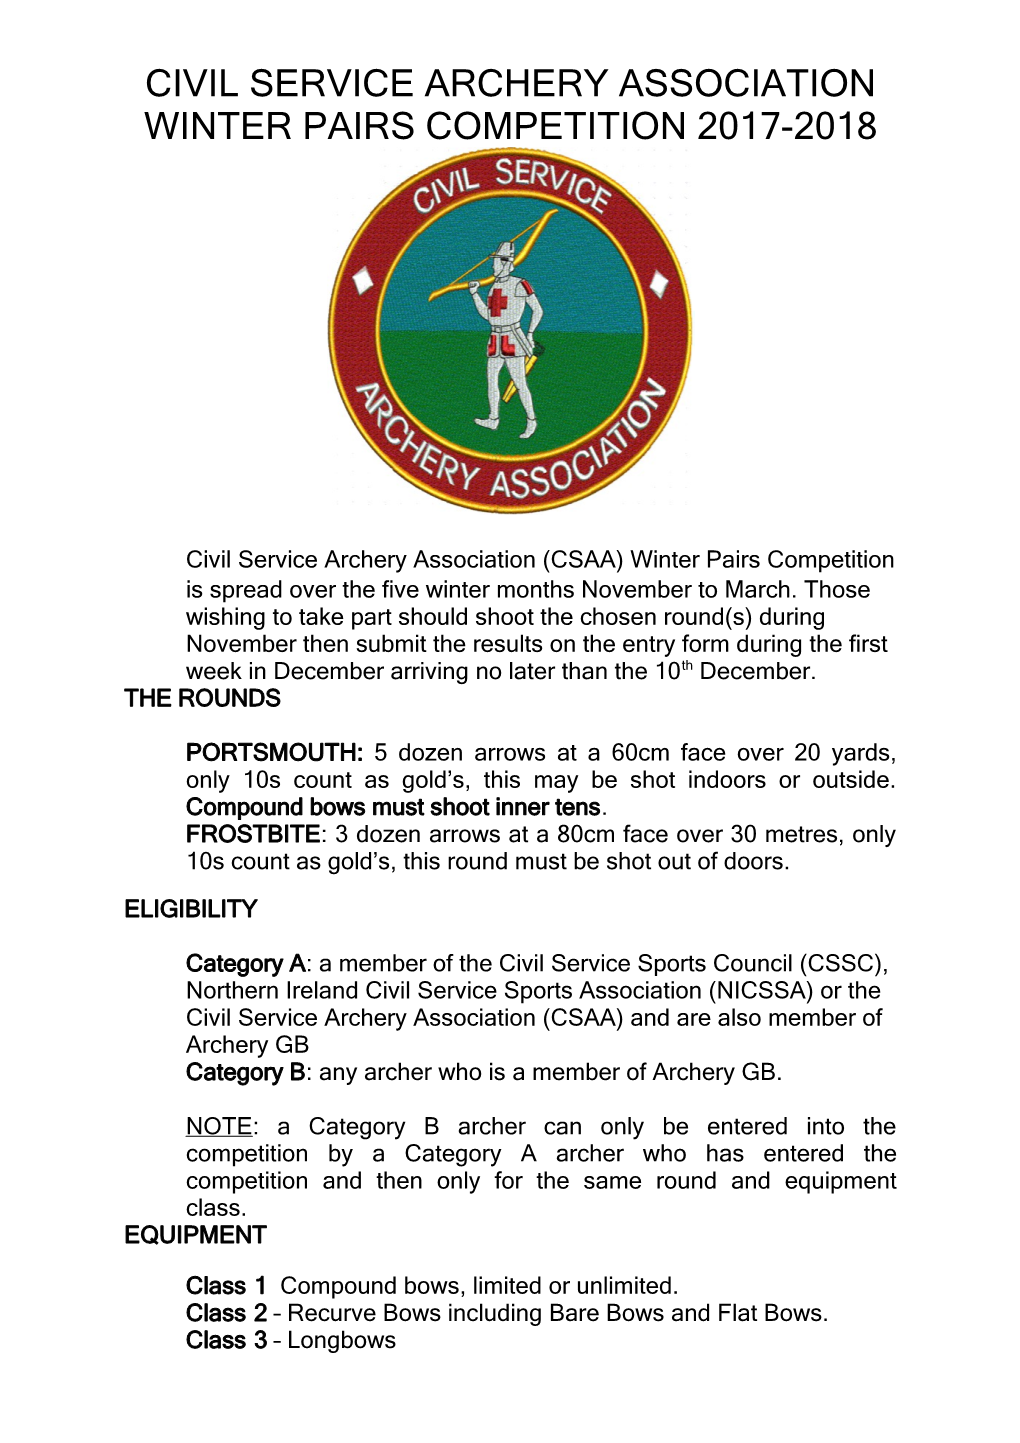 Civil Service Archery Association Winter Pairs Competition 2017-2018